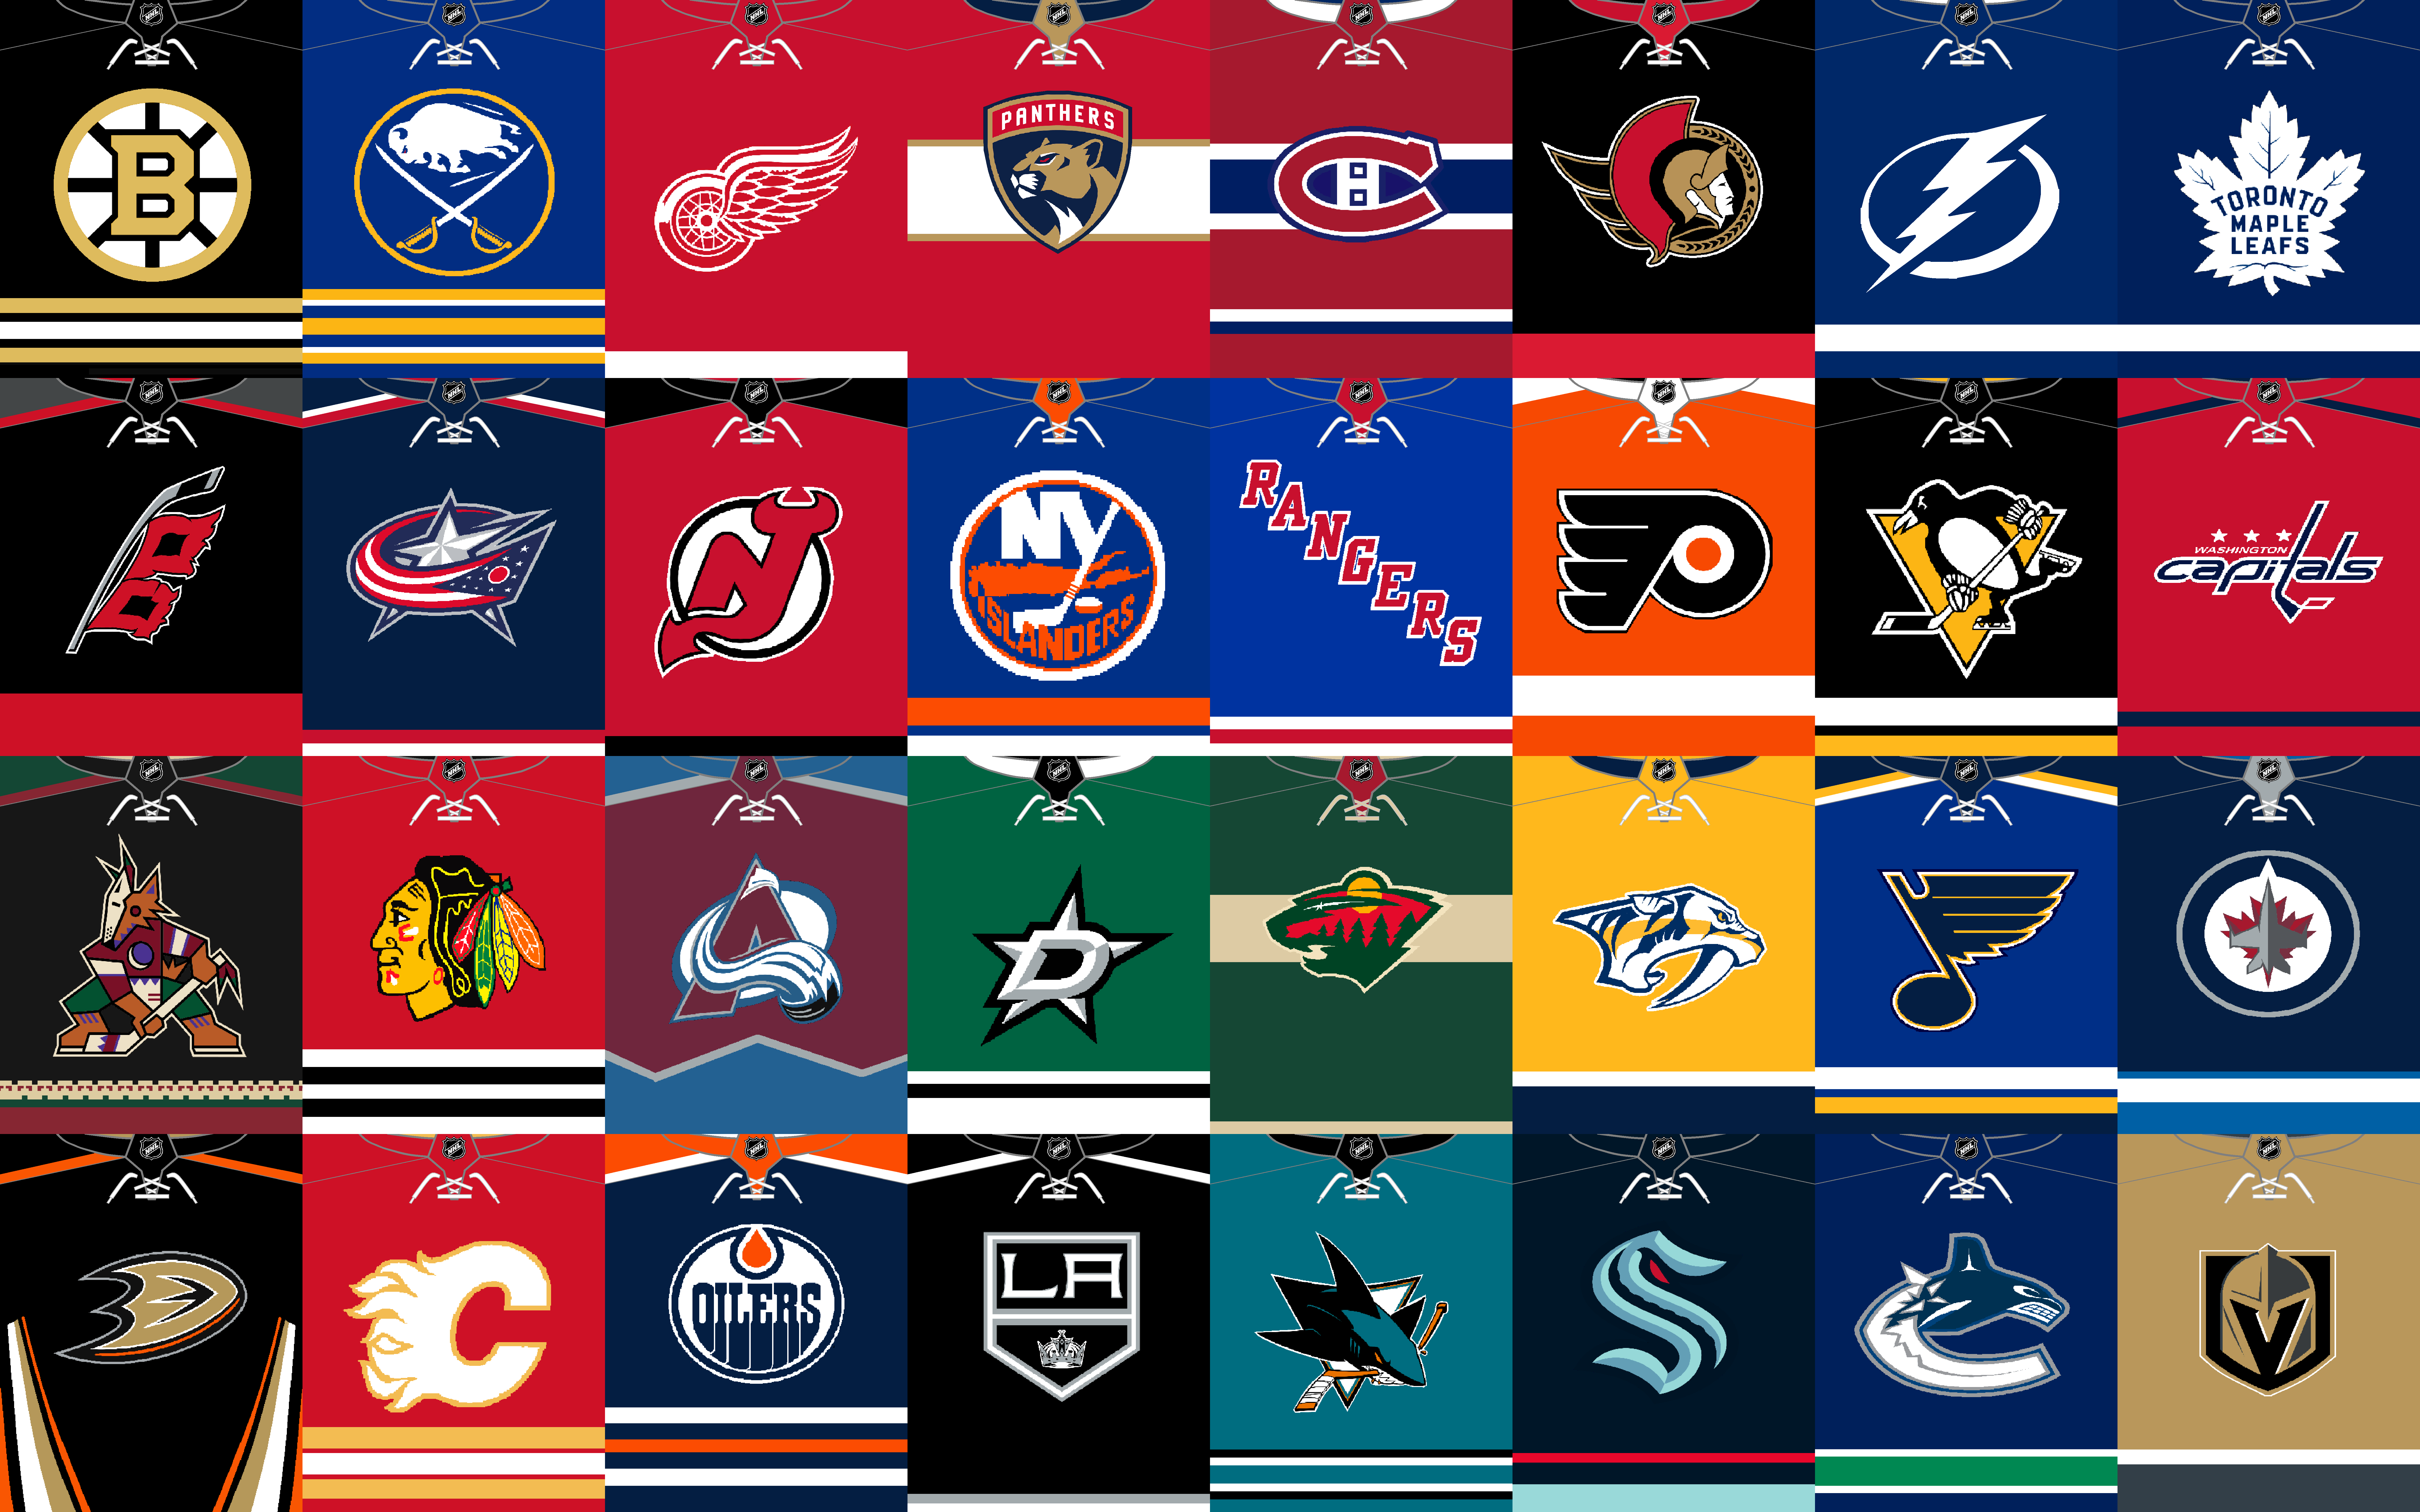 NHL Team Jersey Banners. by StriderPhantom on DeviantArt